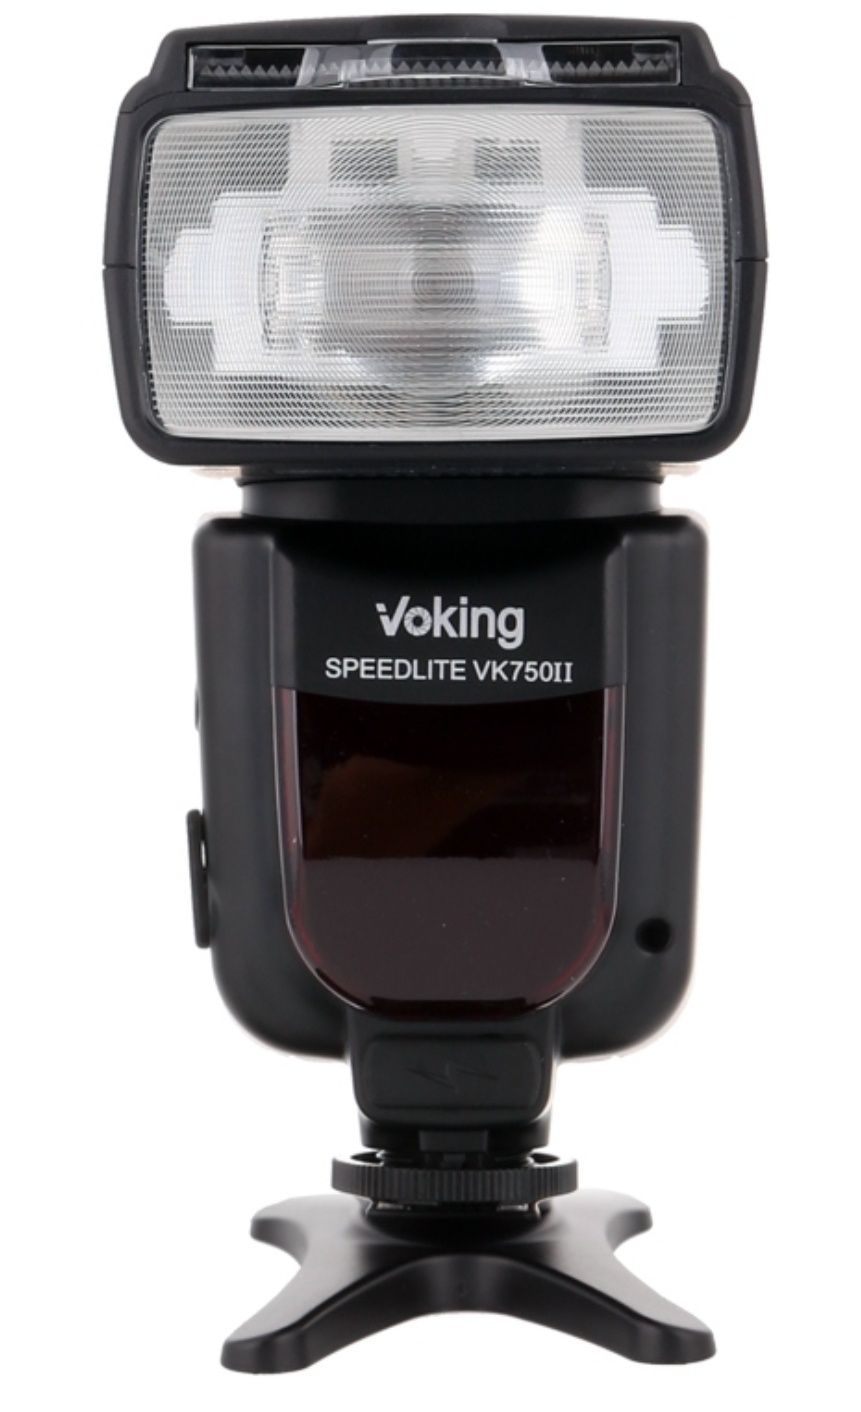 Вспышка Voking Speedlite VK750 II for Canon